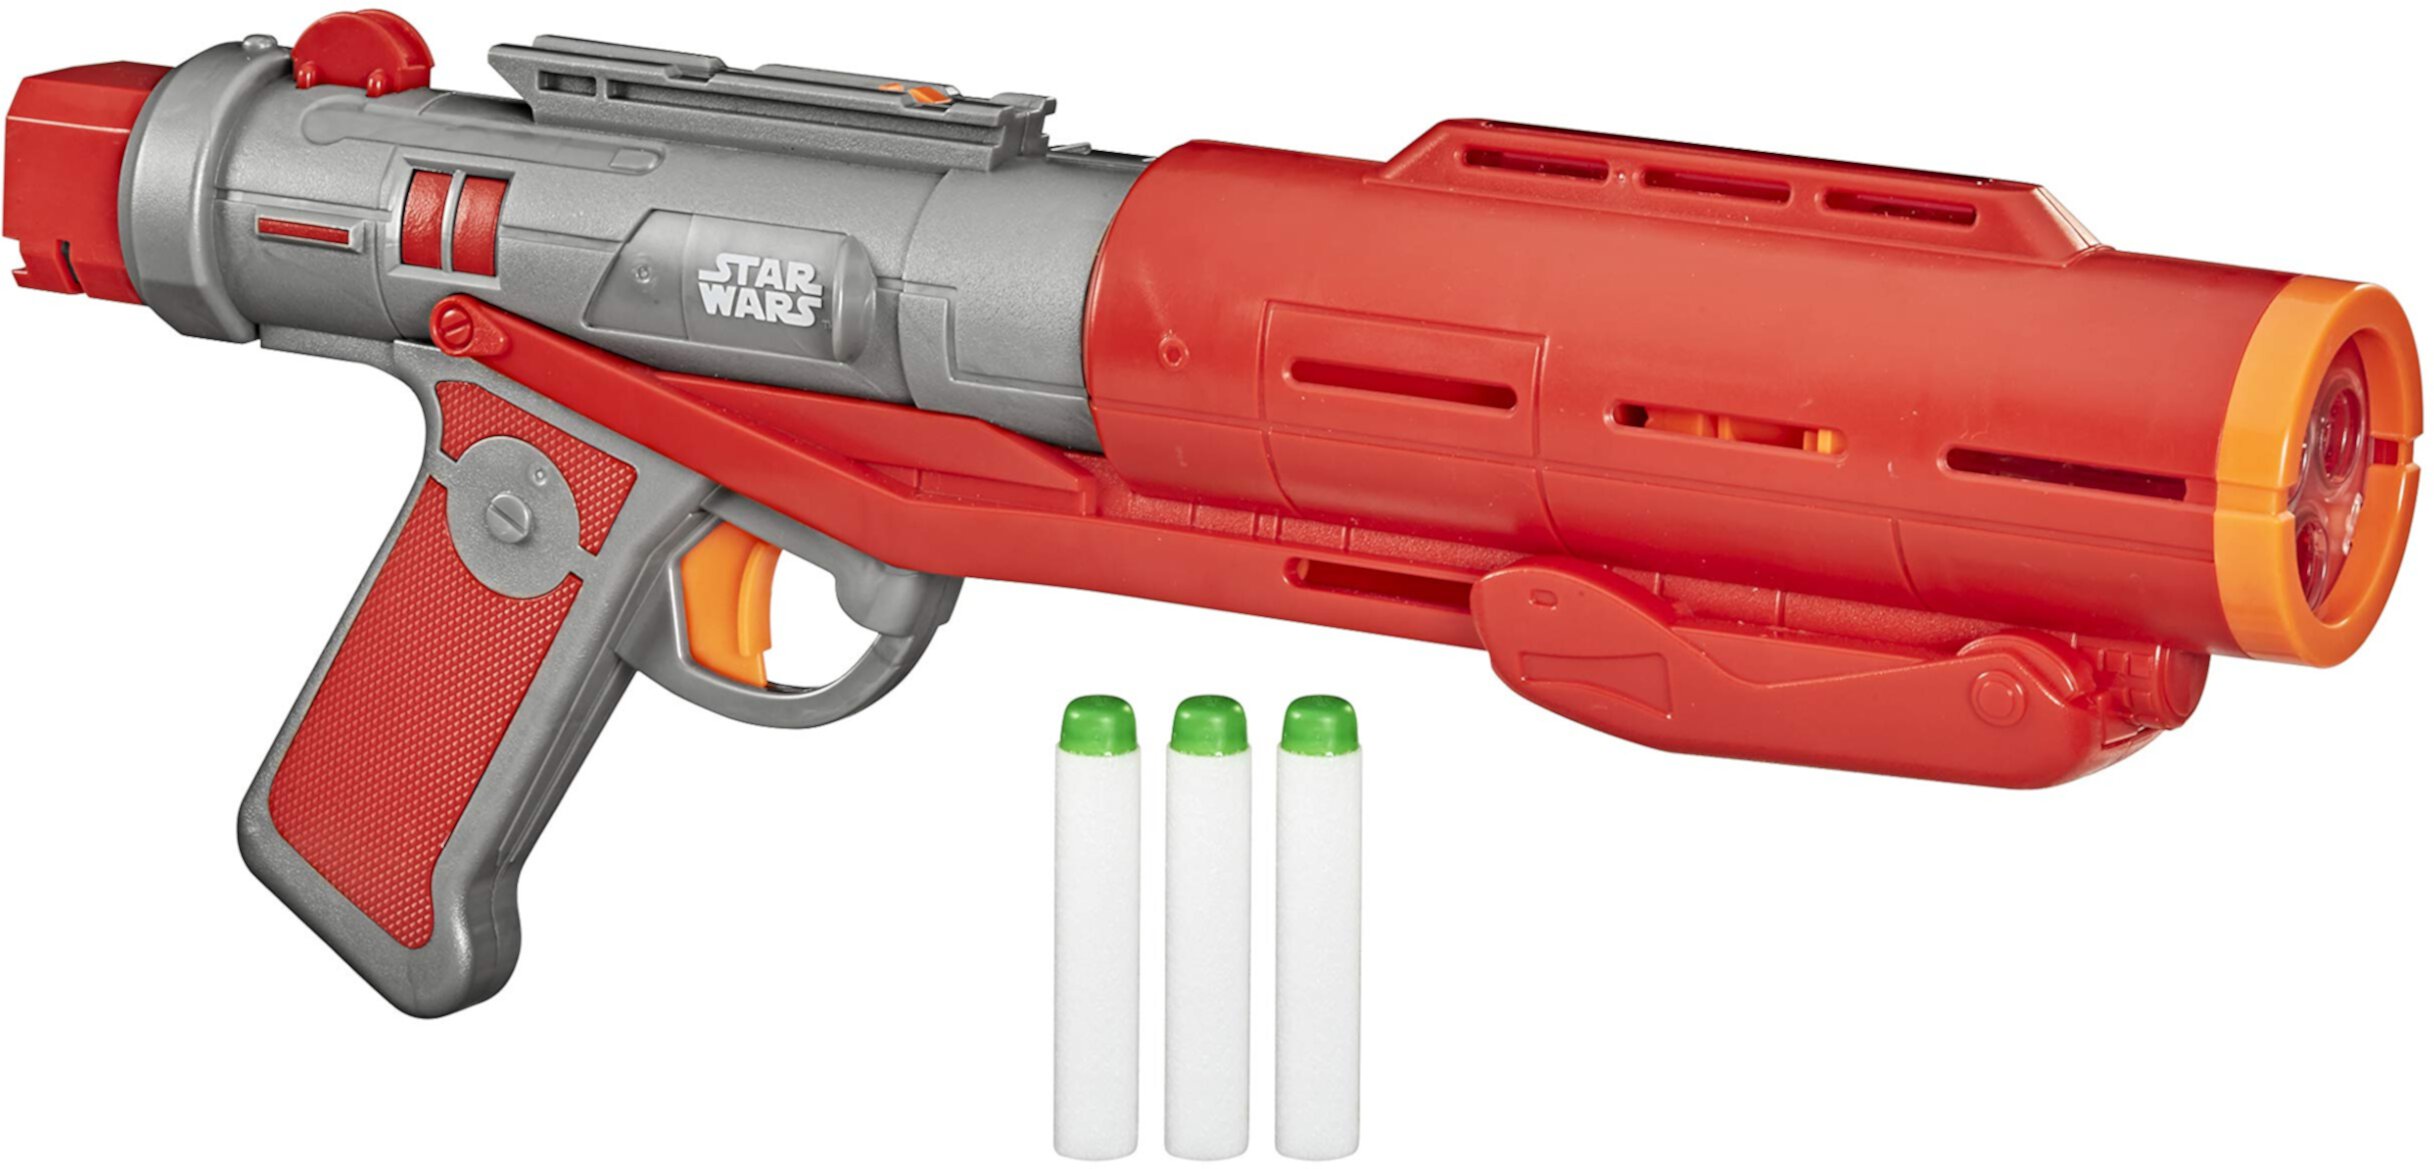 NERF Star Wars Imperial Death Trooper Deluxe Dart Blaster, The Mandalorian, звуки бластера, световые эффекты, 3 светящихся в темноте дротика Nerf